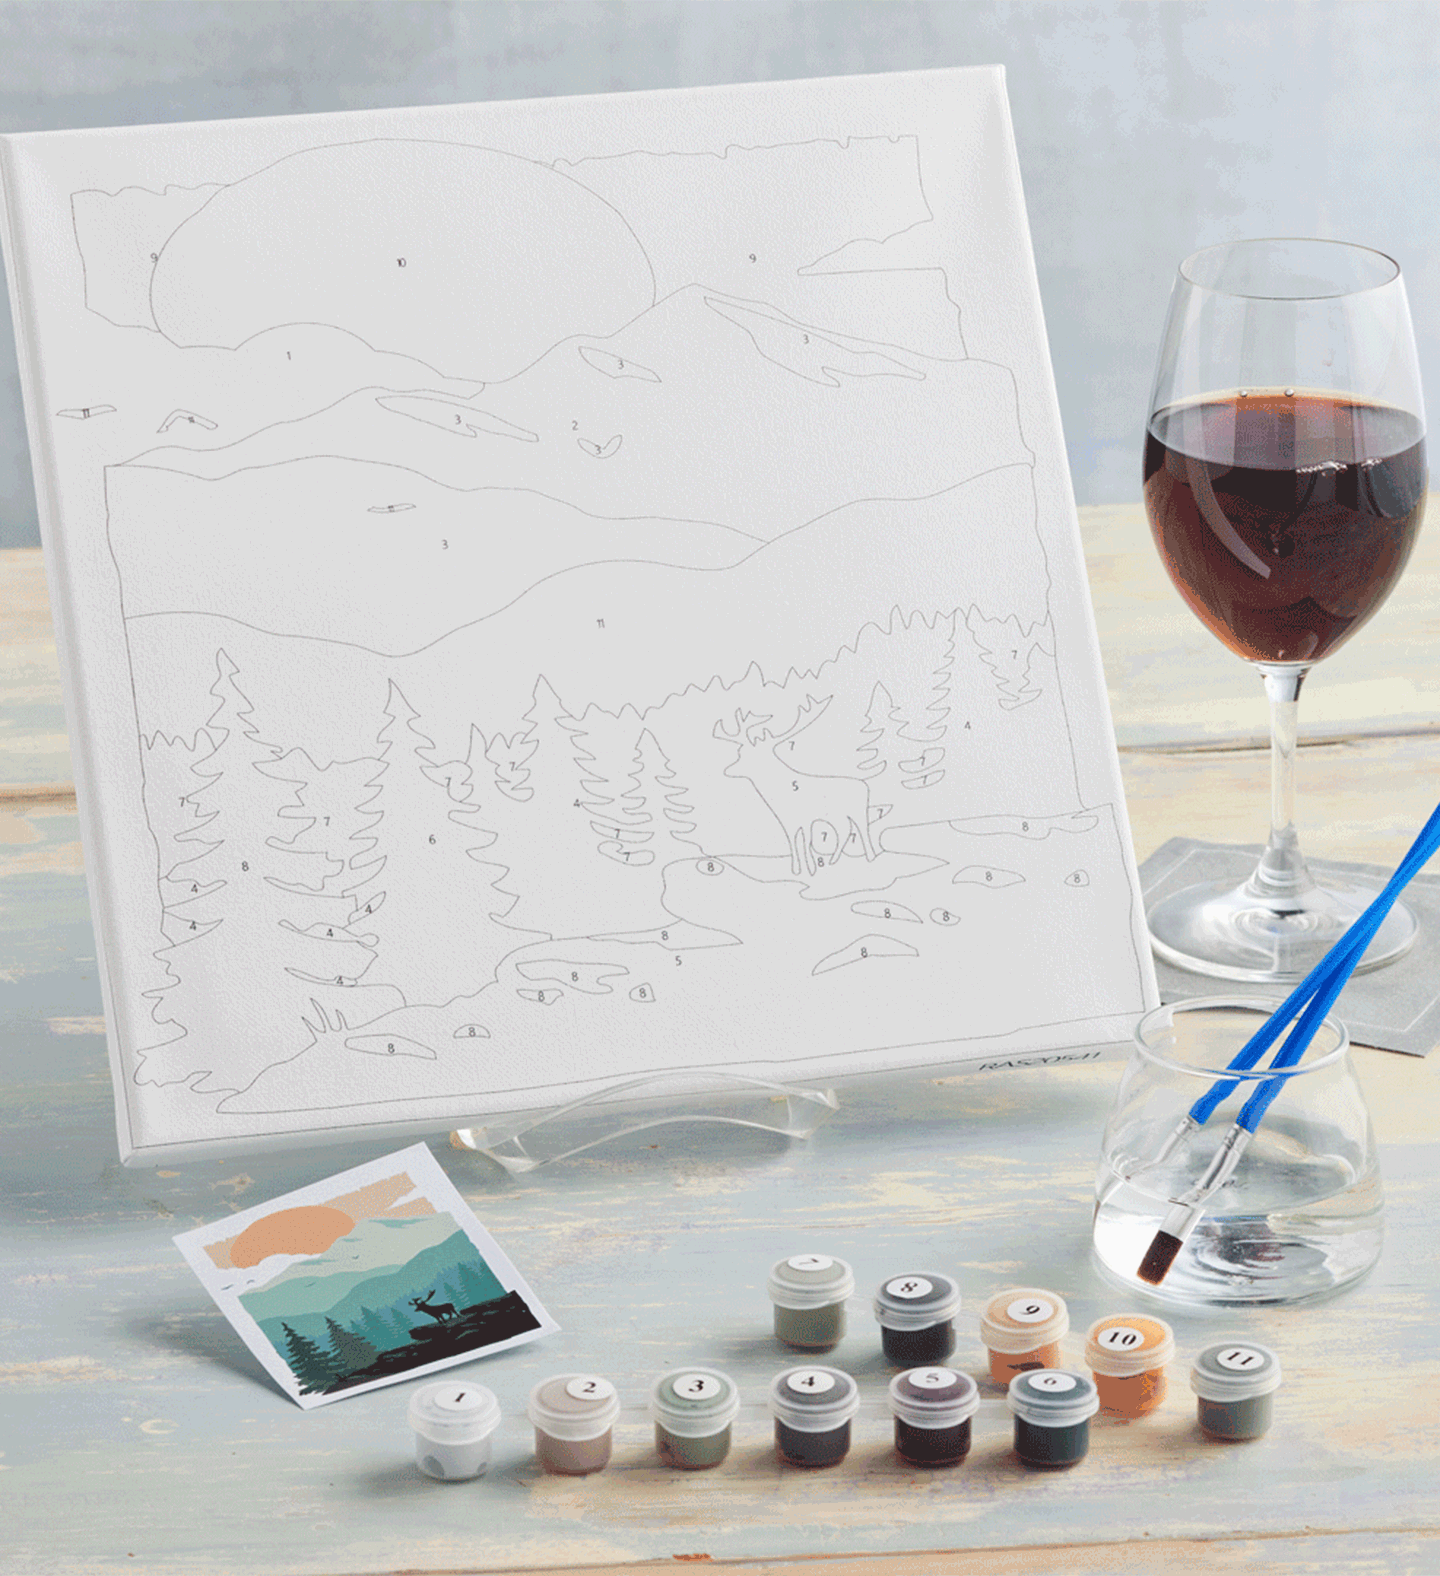 DIY Painting Set with Wine